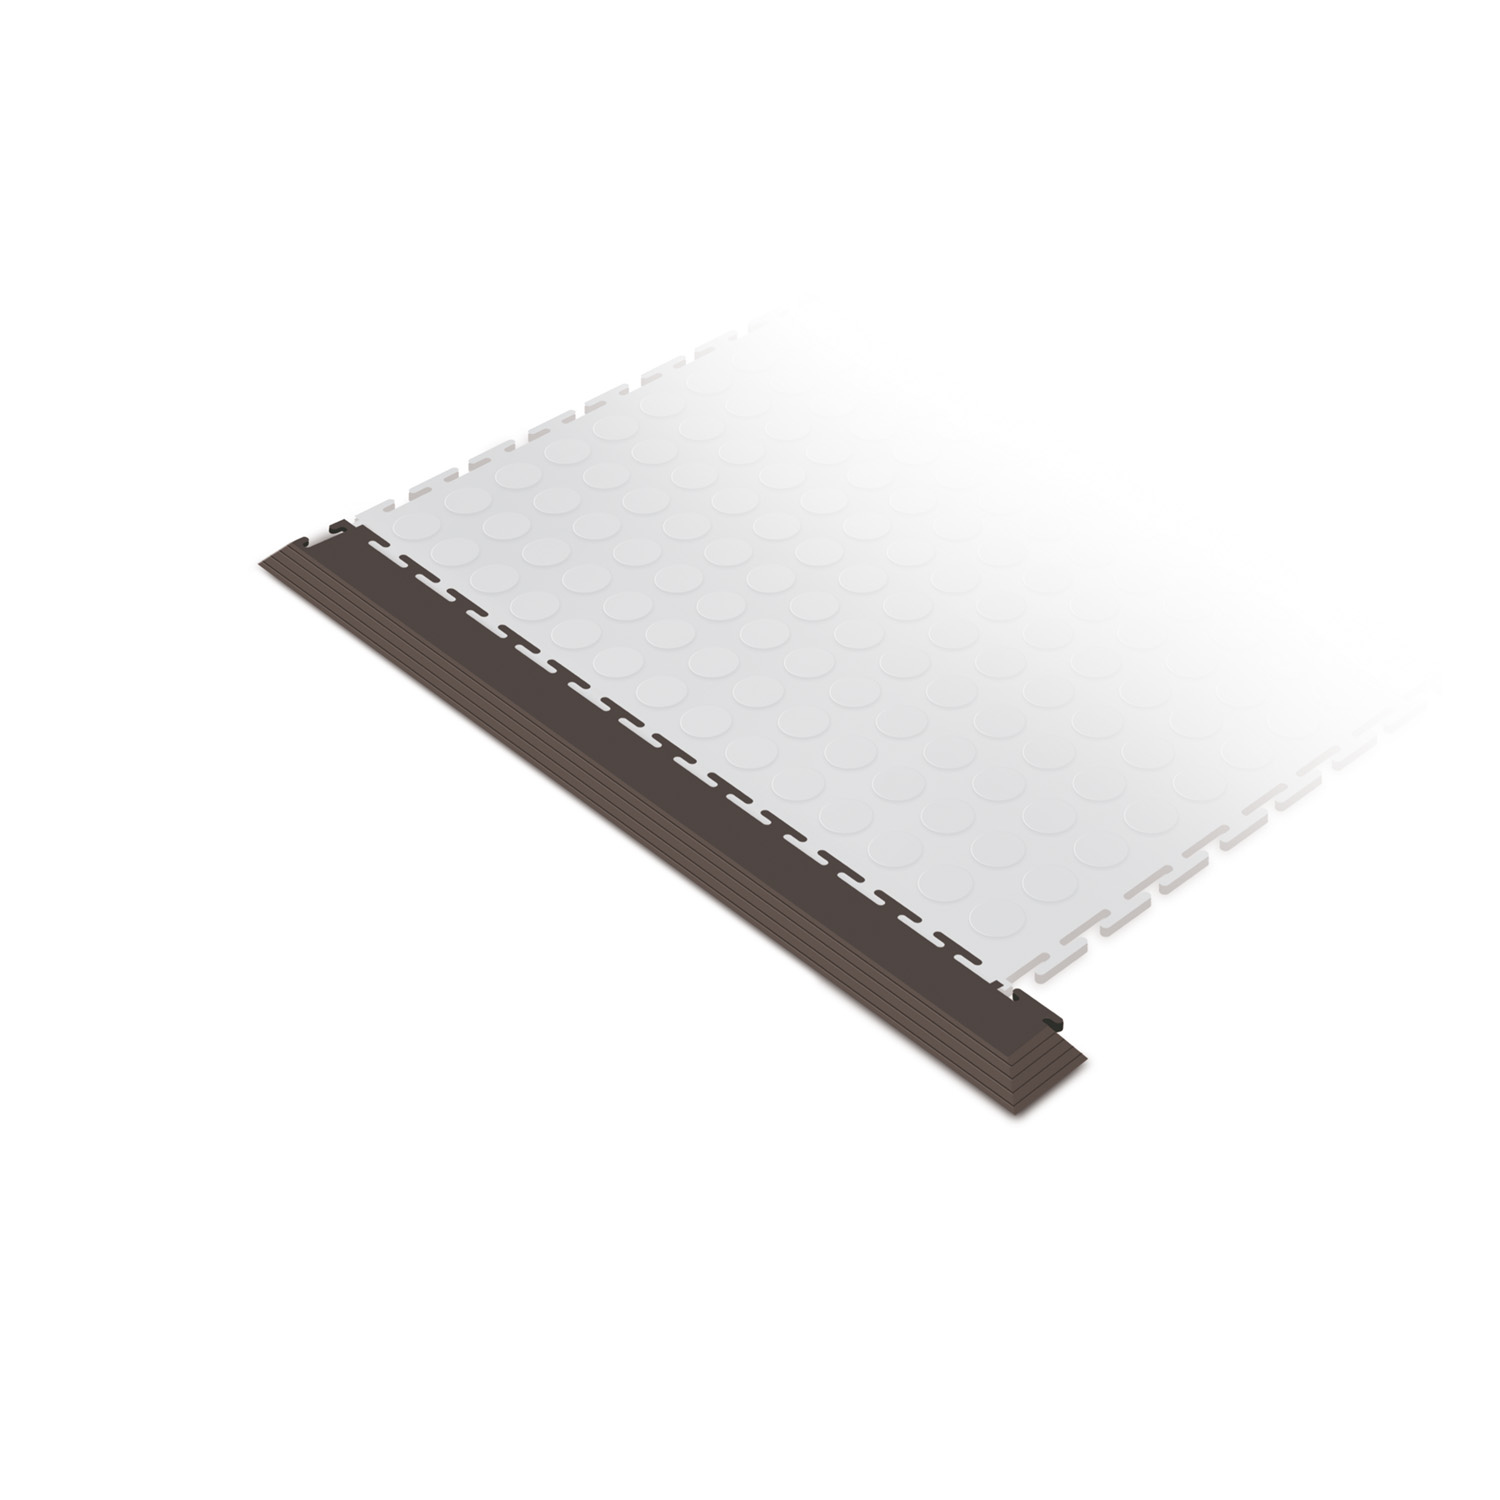 Standard corner edge ramp tile (black)